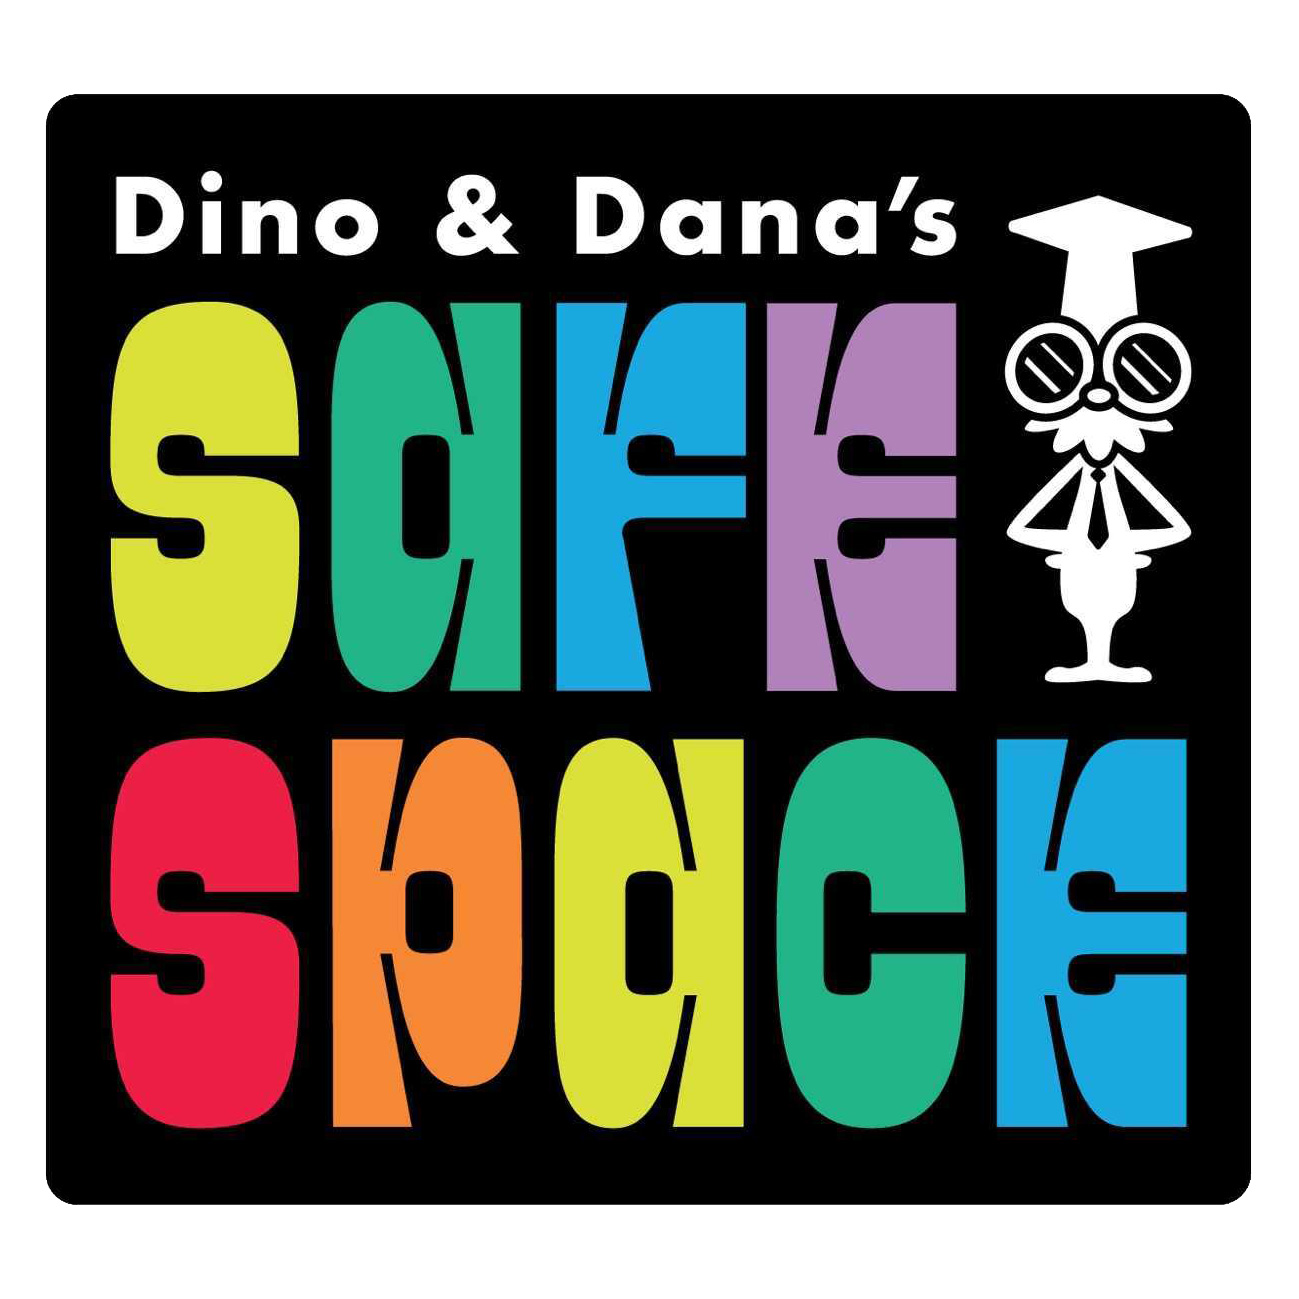 Dino & Dana's Safe Space Podcast Cover - Square